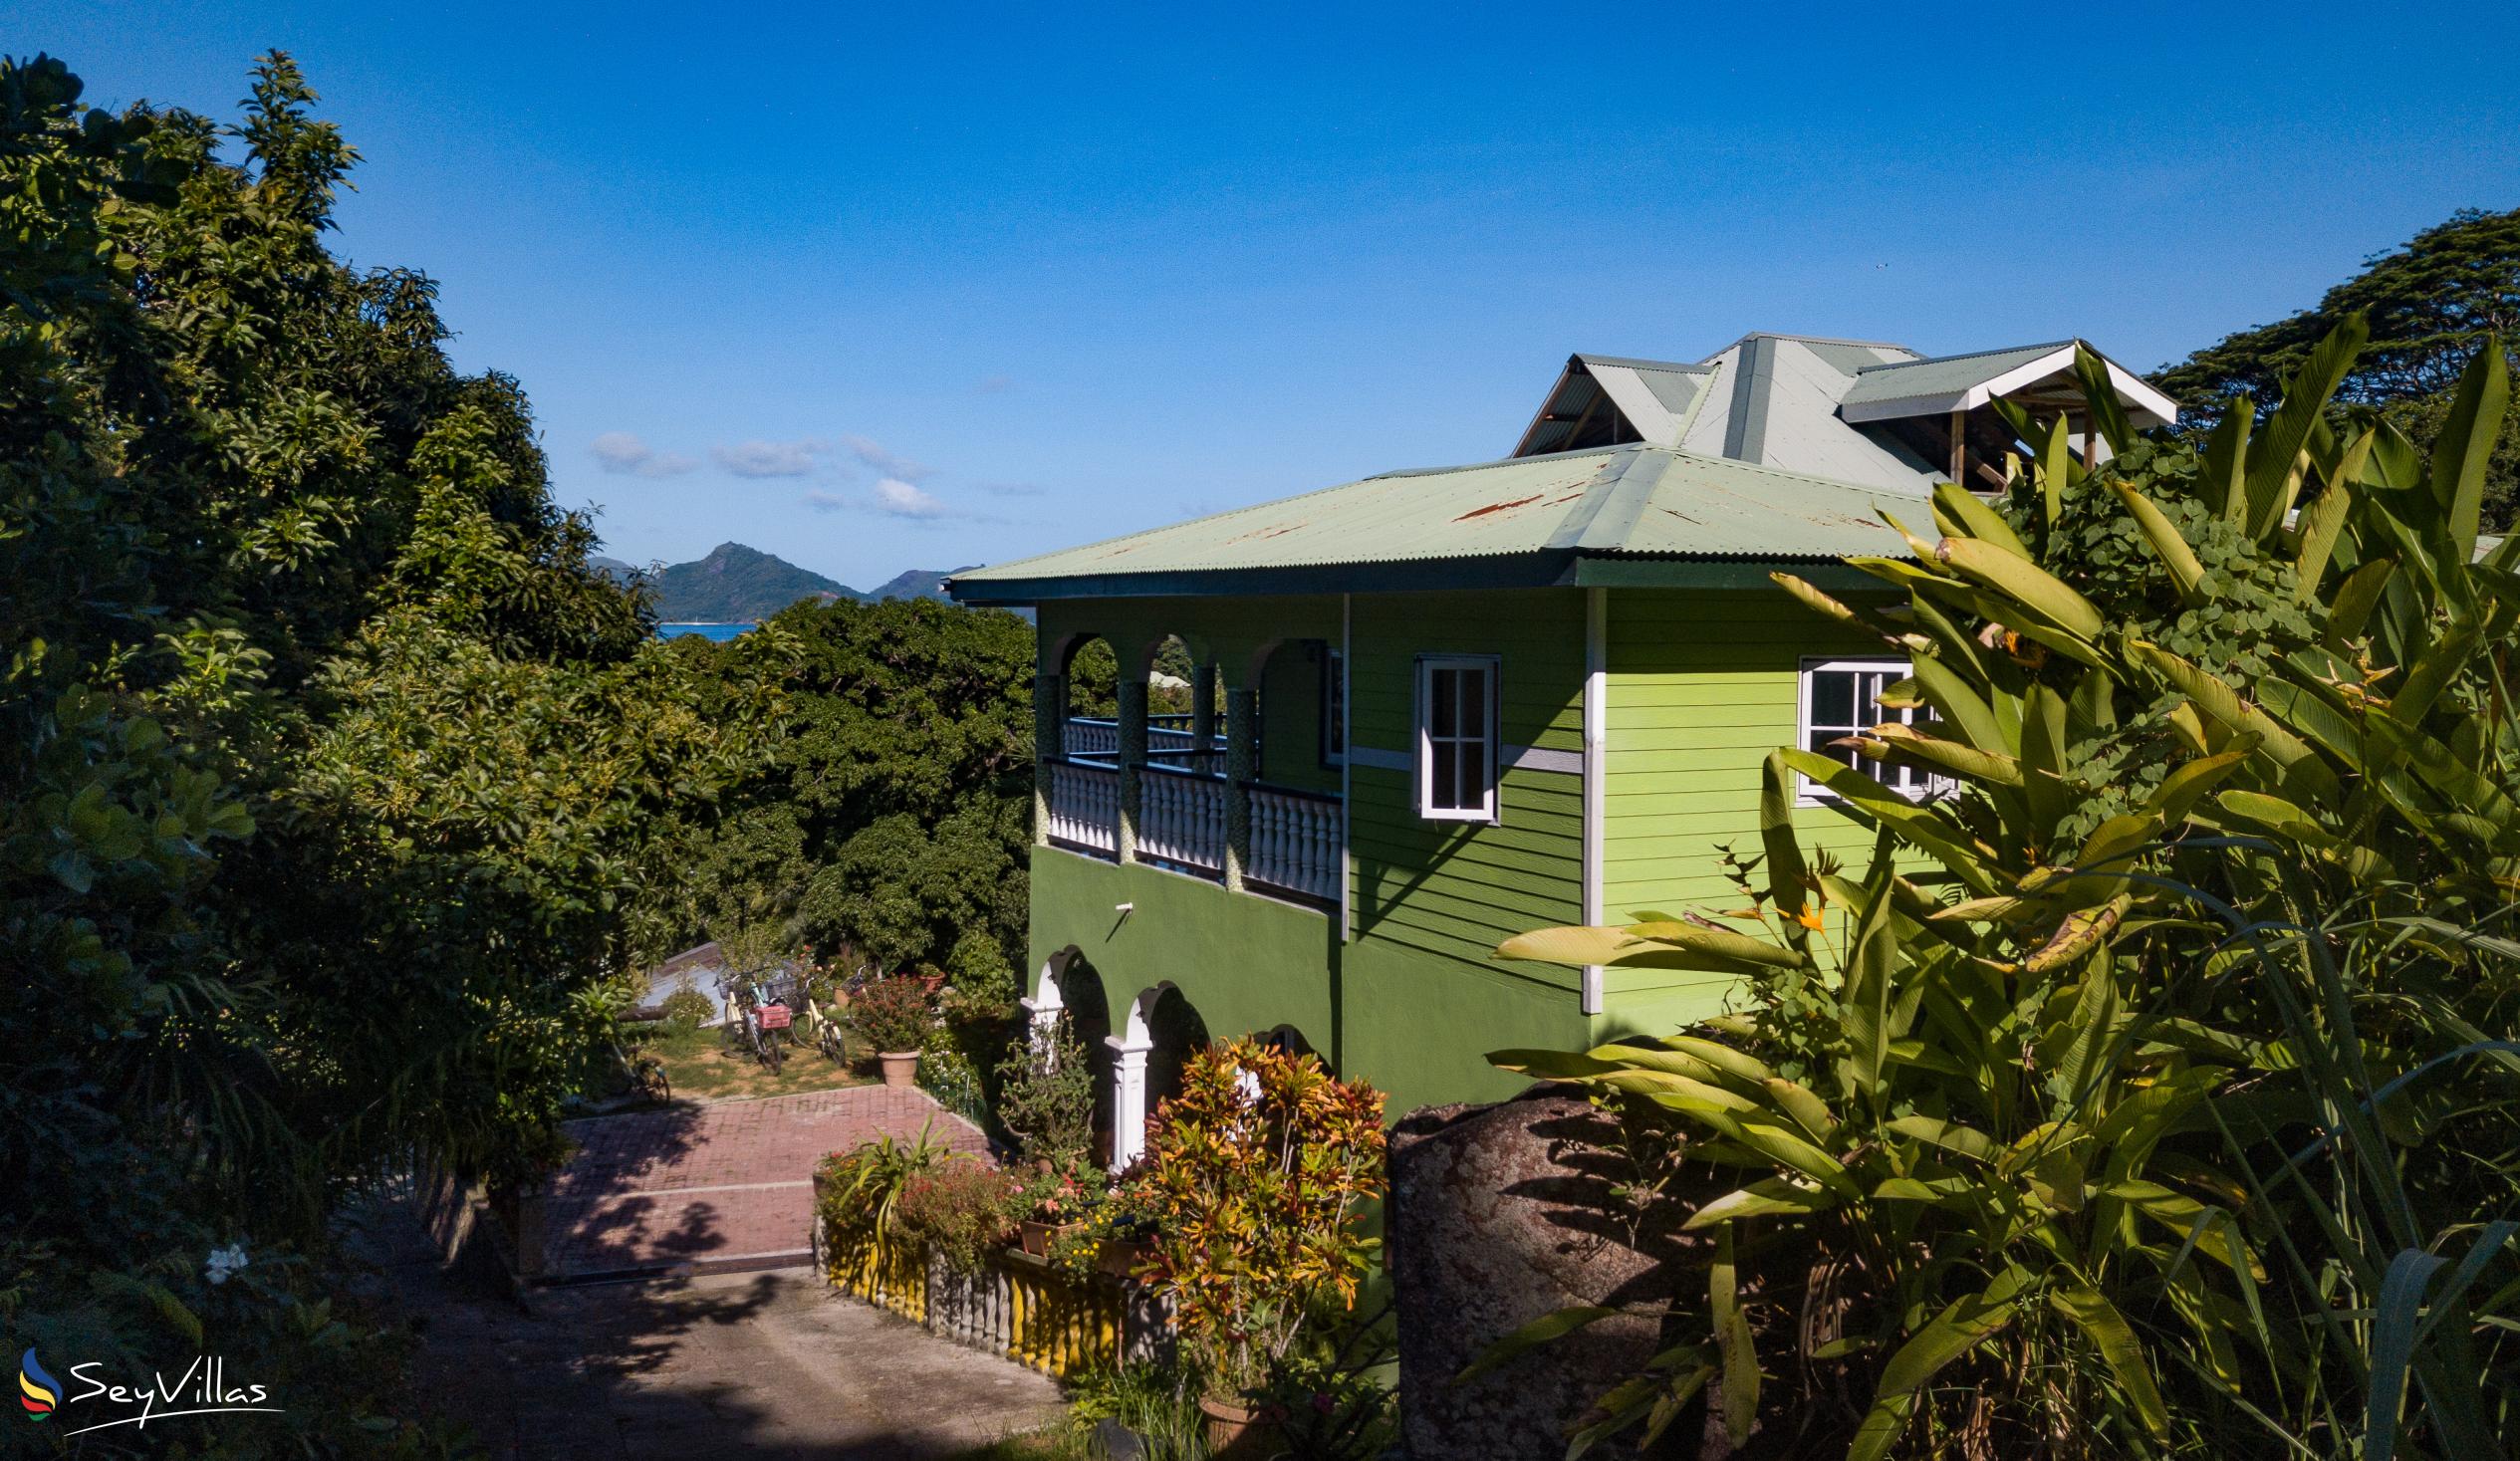 Foto 6: Villa Hortensia - Aussenbereich - La Digue (Seychellen)